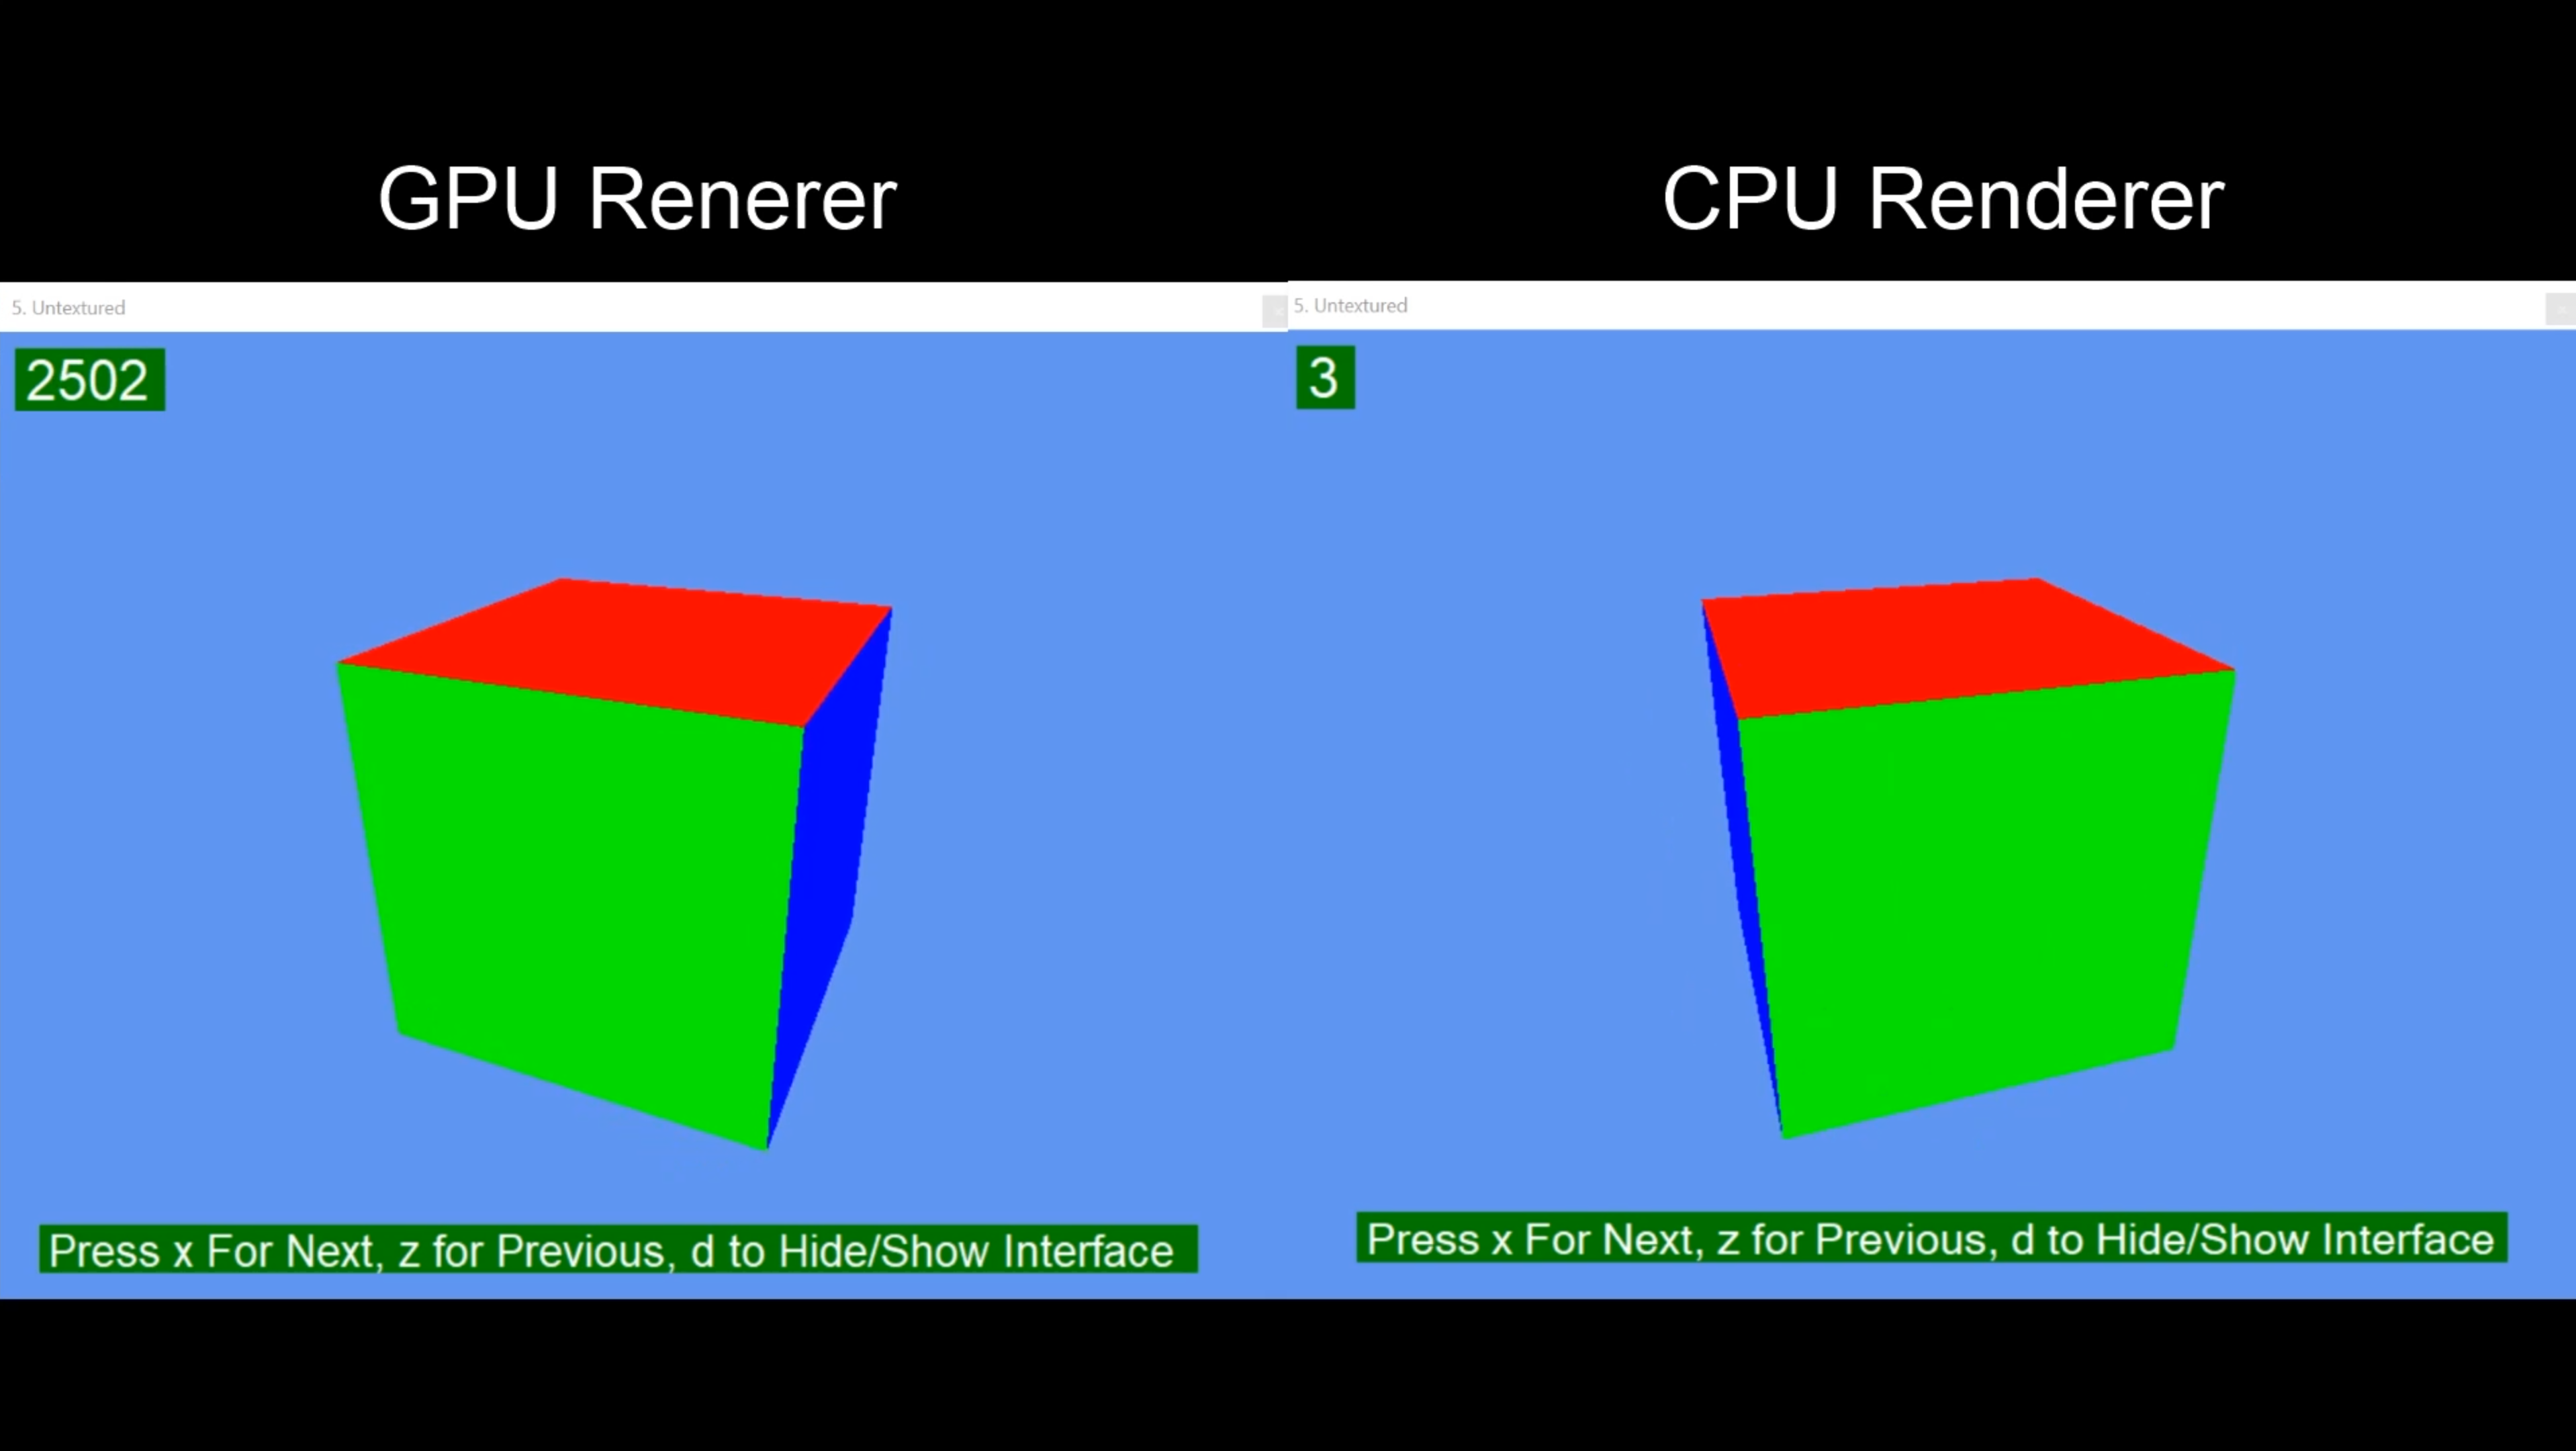 CPU Renderer